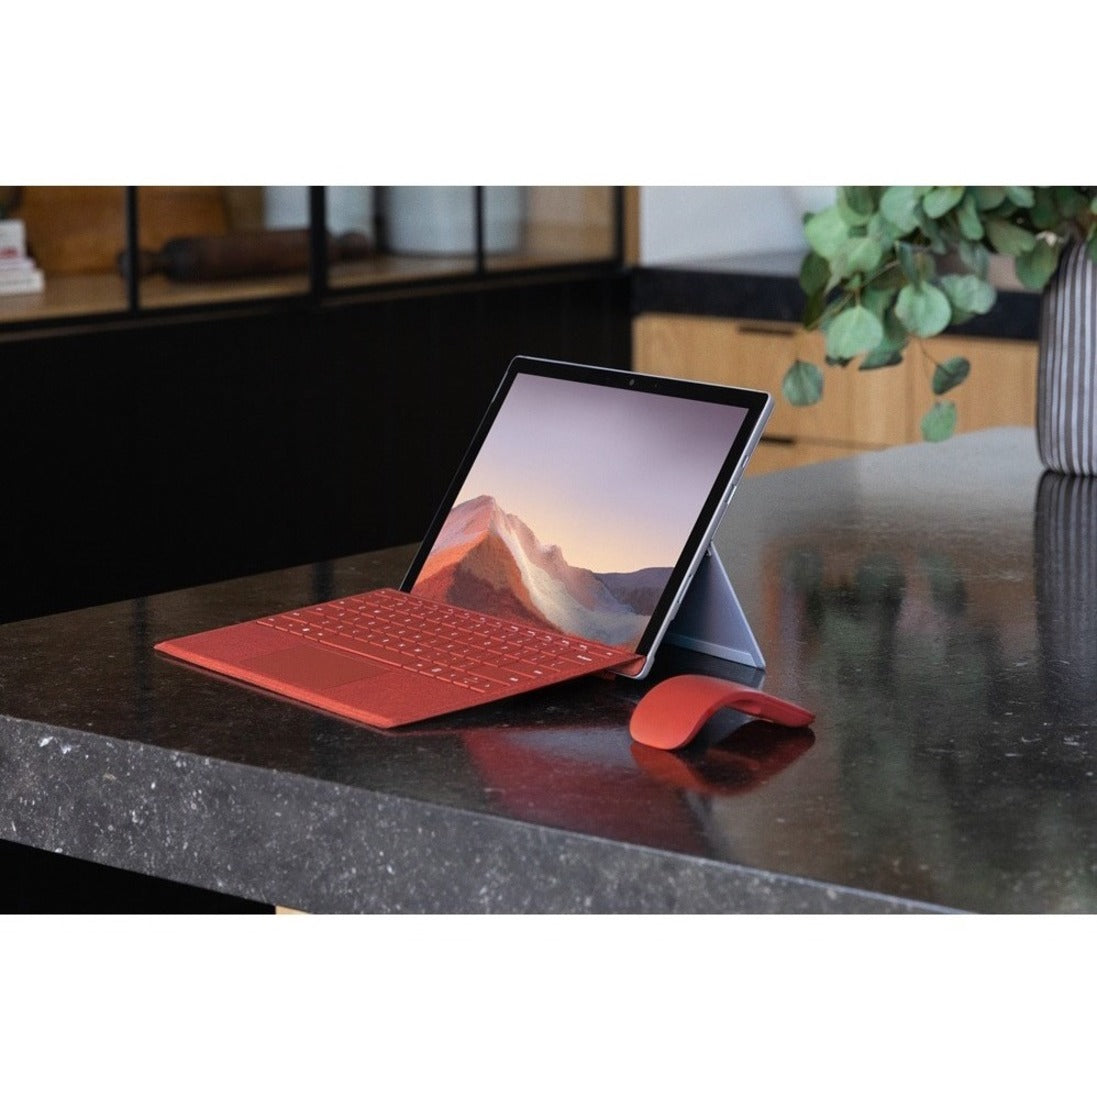 Microsoft 1NA-00001 Surface Pro 7+ Tablet, 12.3" PixelSense Display, Core i5, 8GB RAM, 256GB SSD, Windows 10 Pro